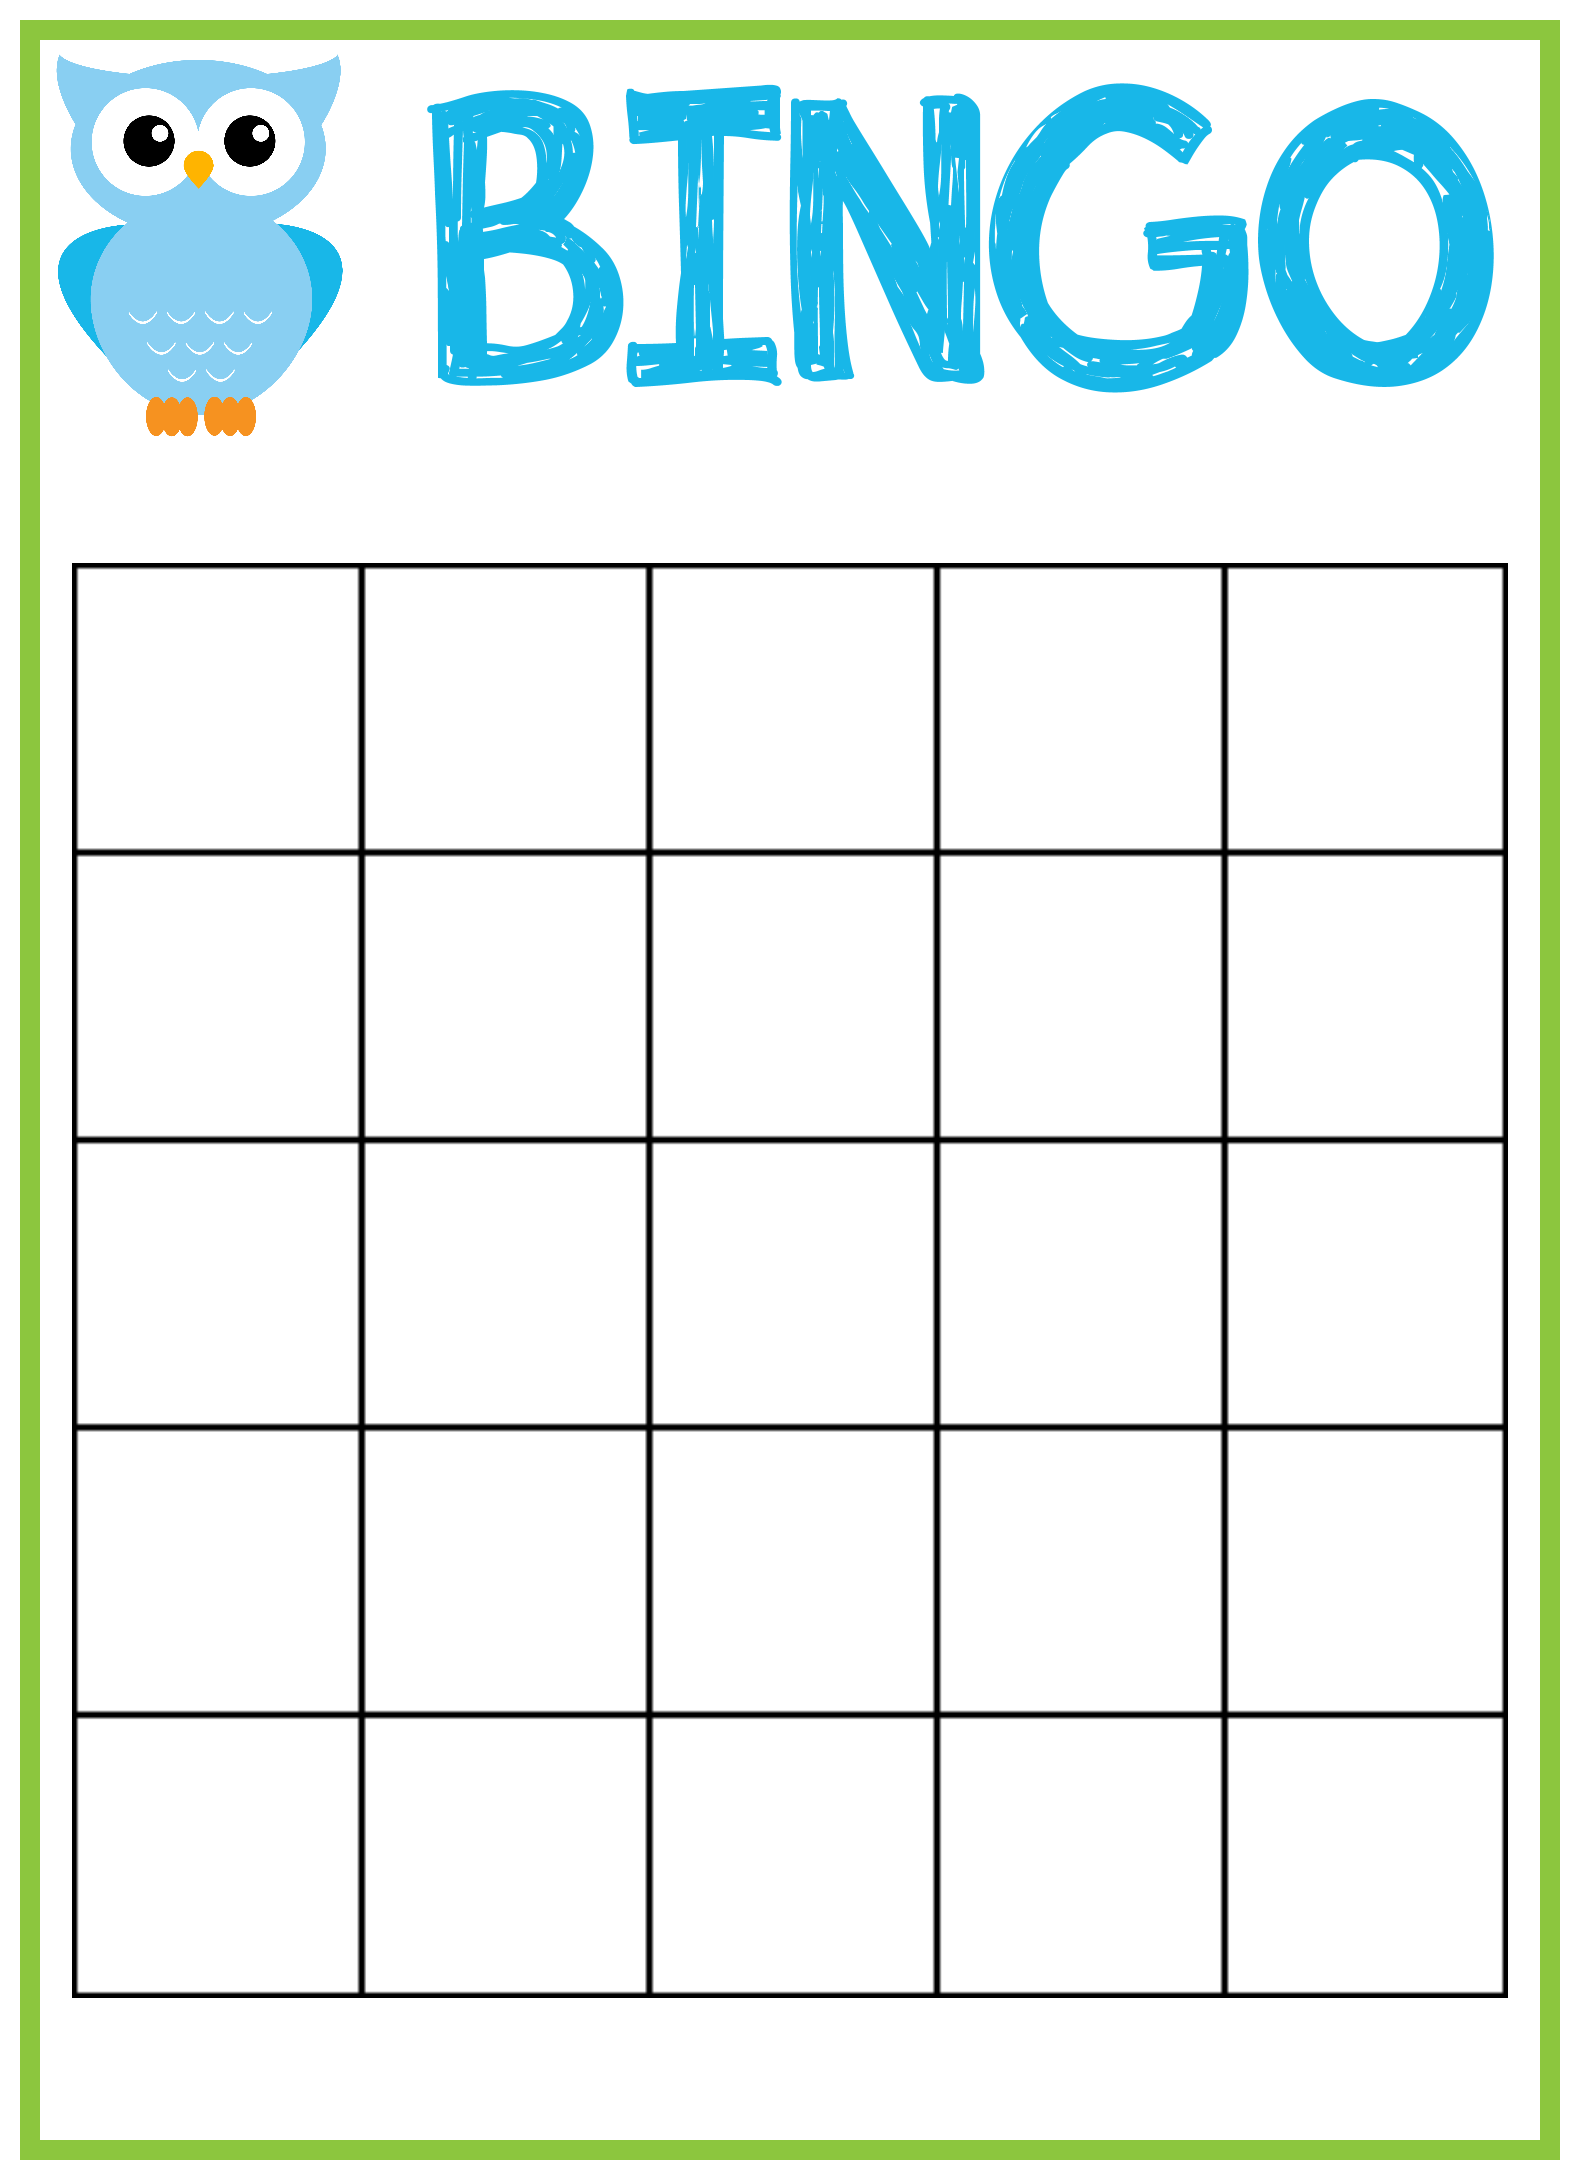 bingo-card-templates